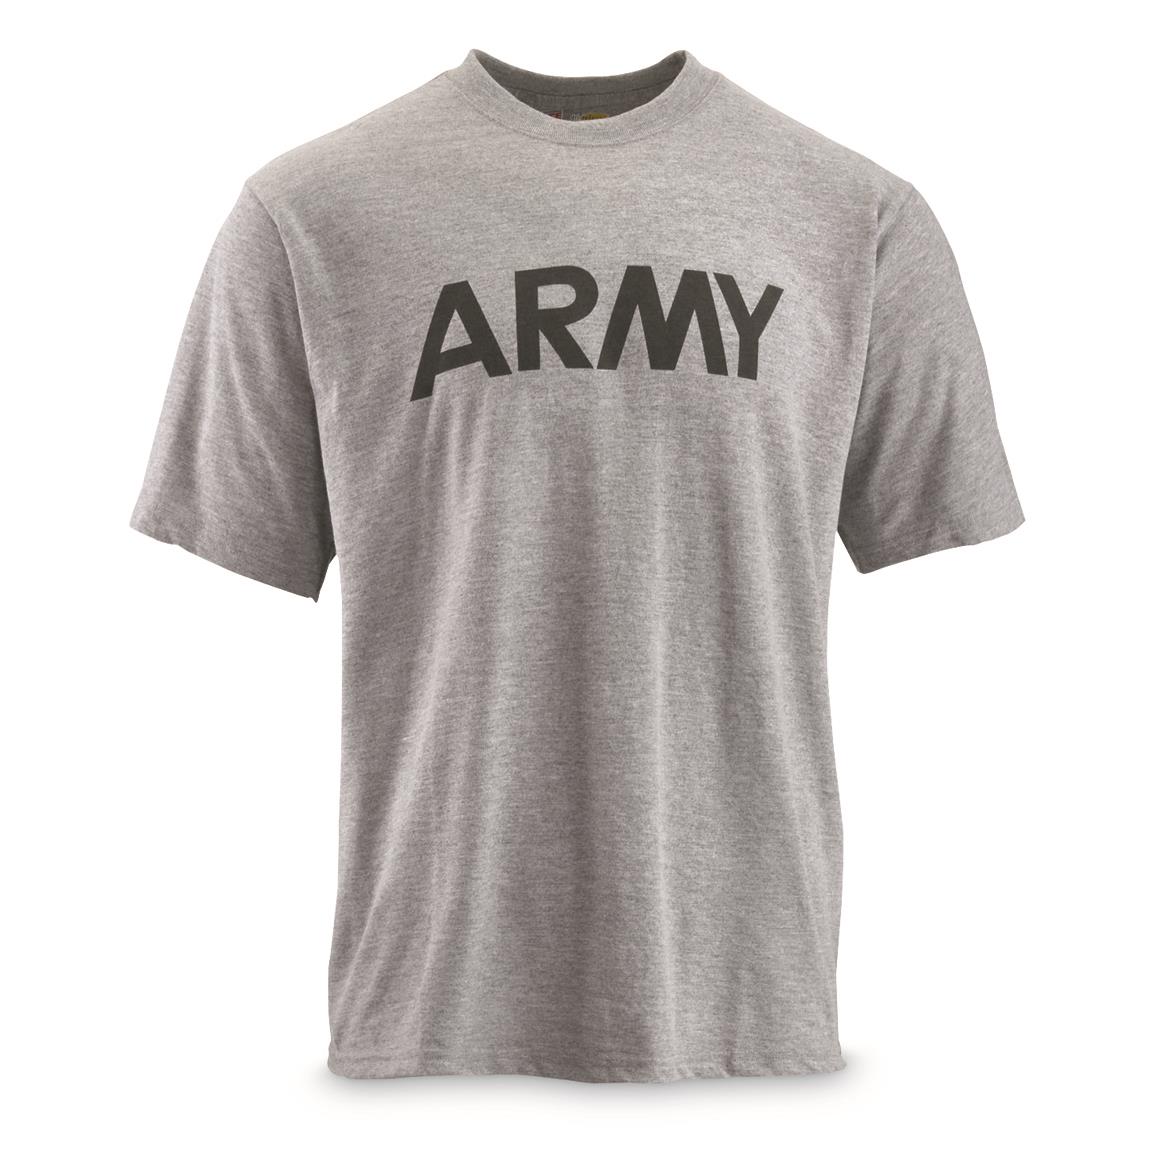 U.S. Army Surplus Moisture Wicking Training T-Shirt, New, Gray